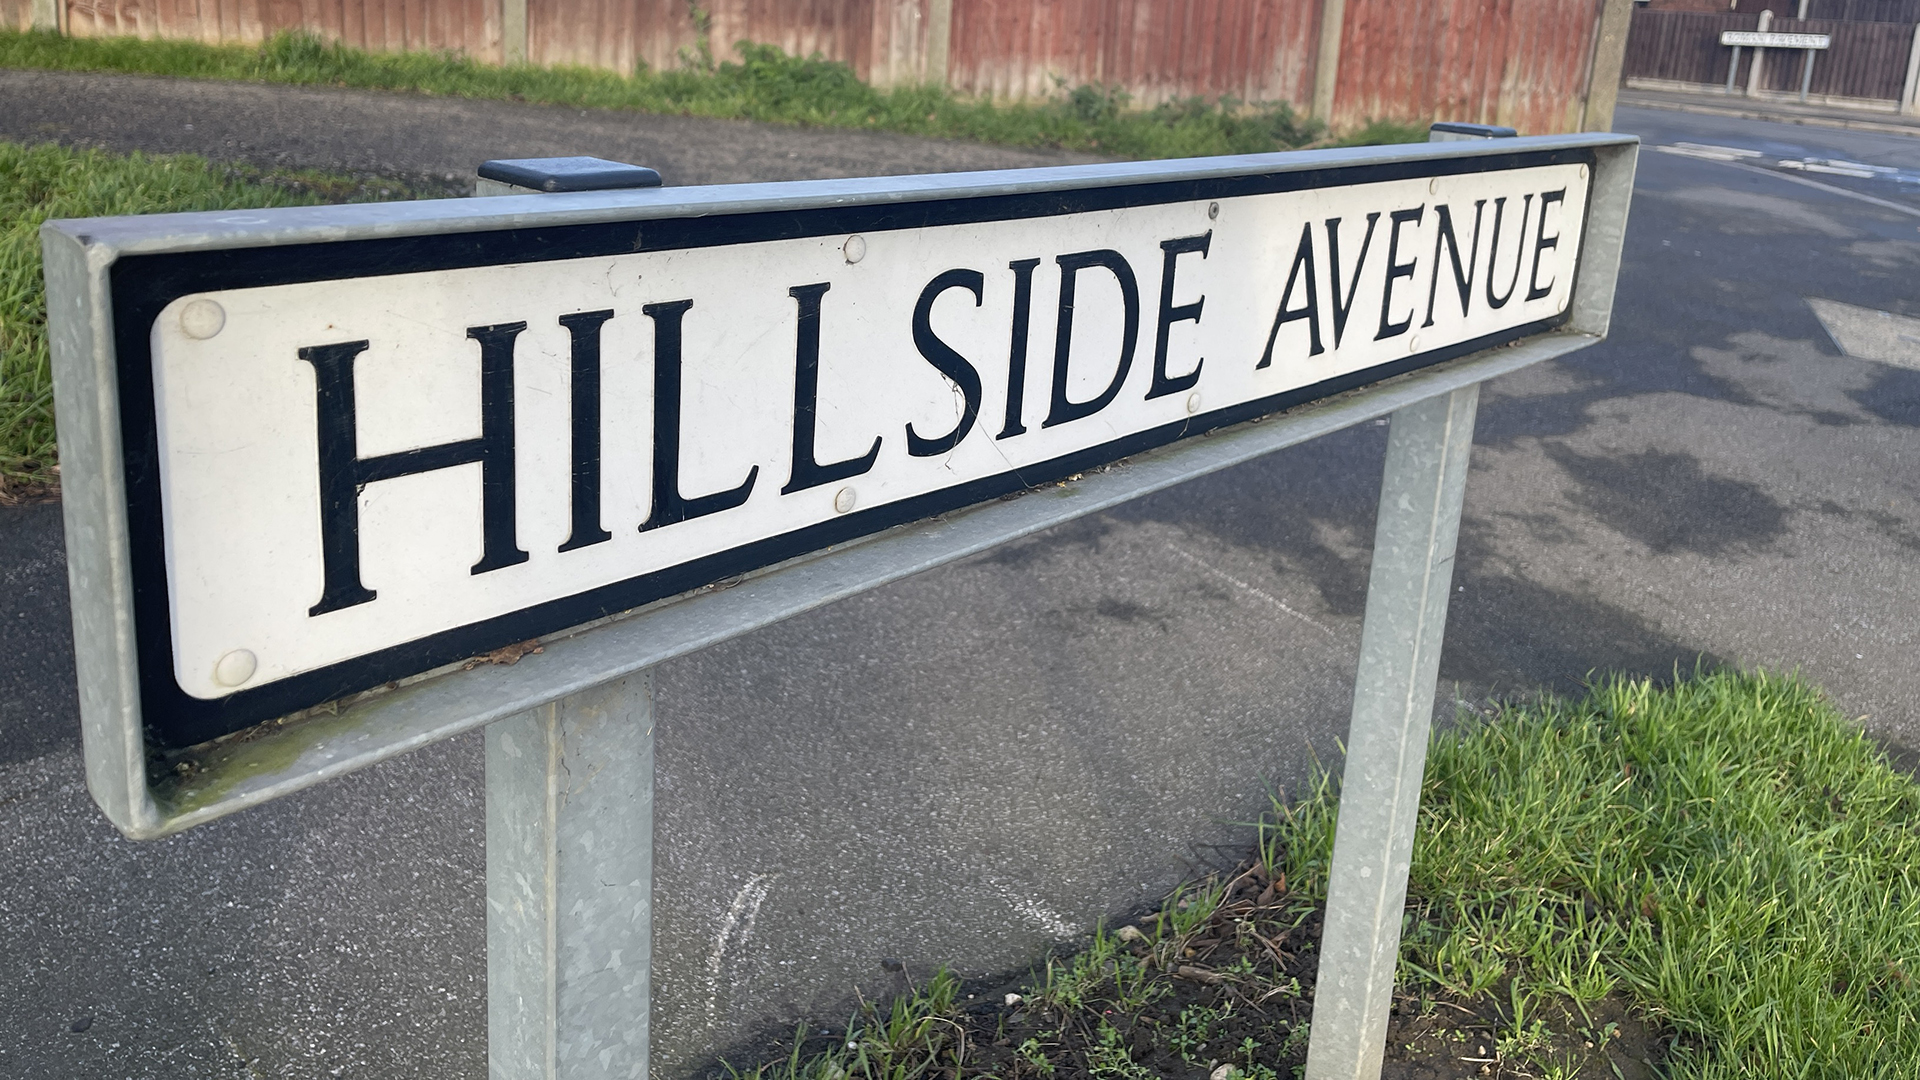 Image of Hillside Avenue street sign